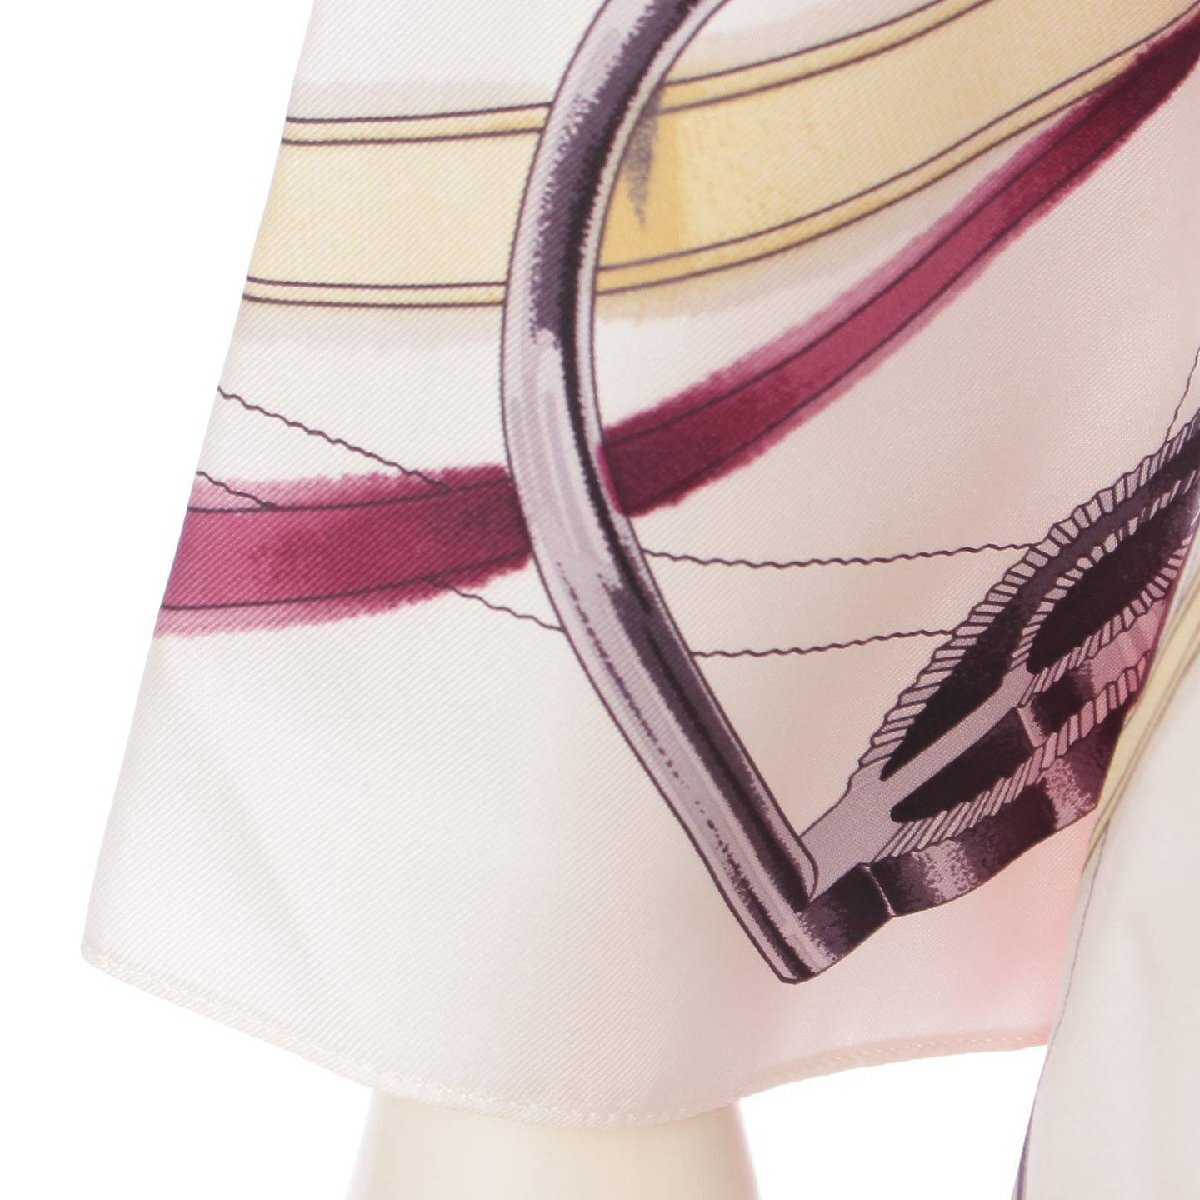 [ Hermes ]Hermes 18 year grand manege silk bow Thai blouse shirt white 34 [ used ][ regular goods guarantee ]202586